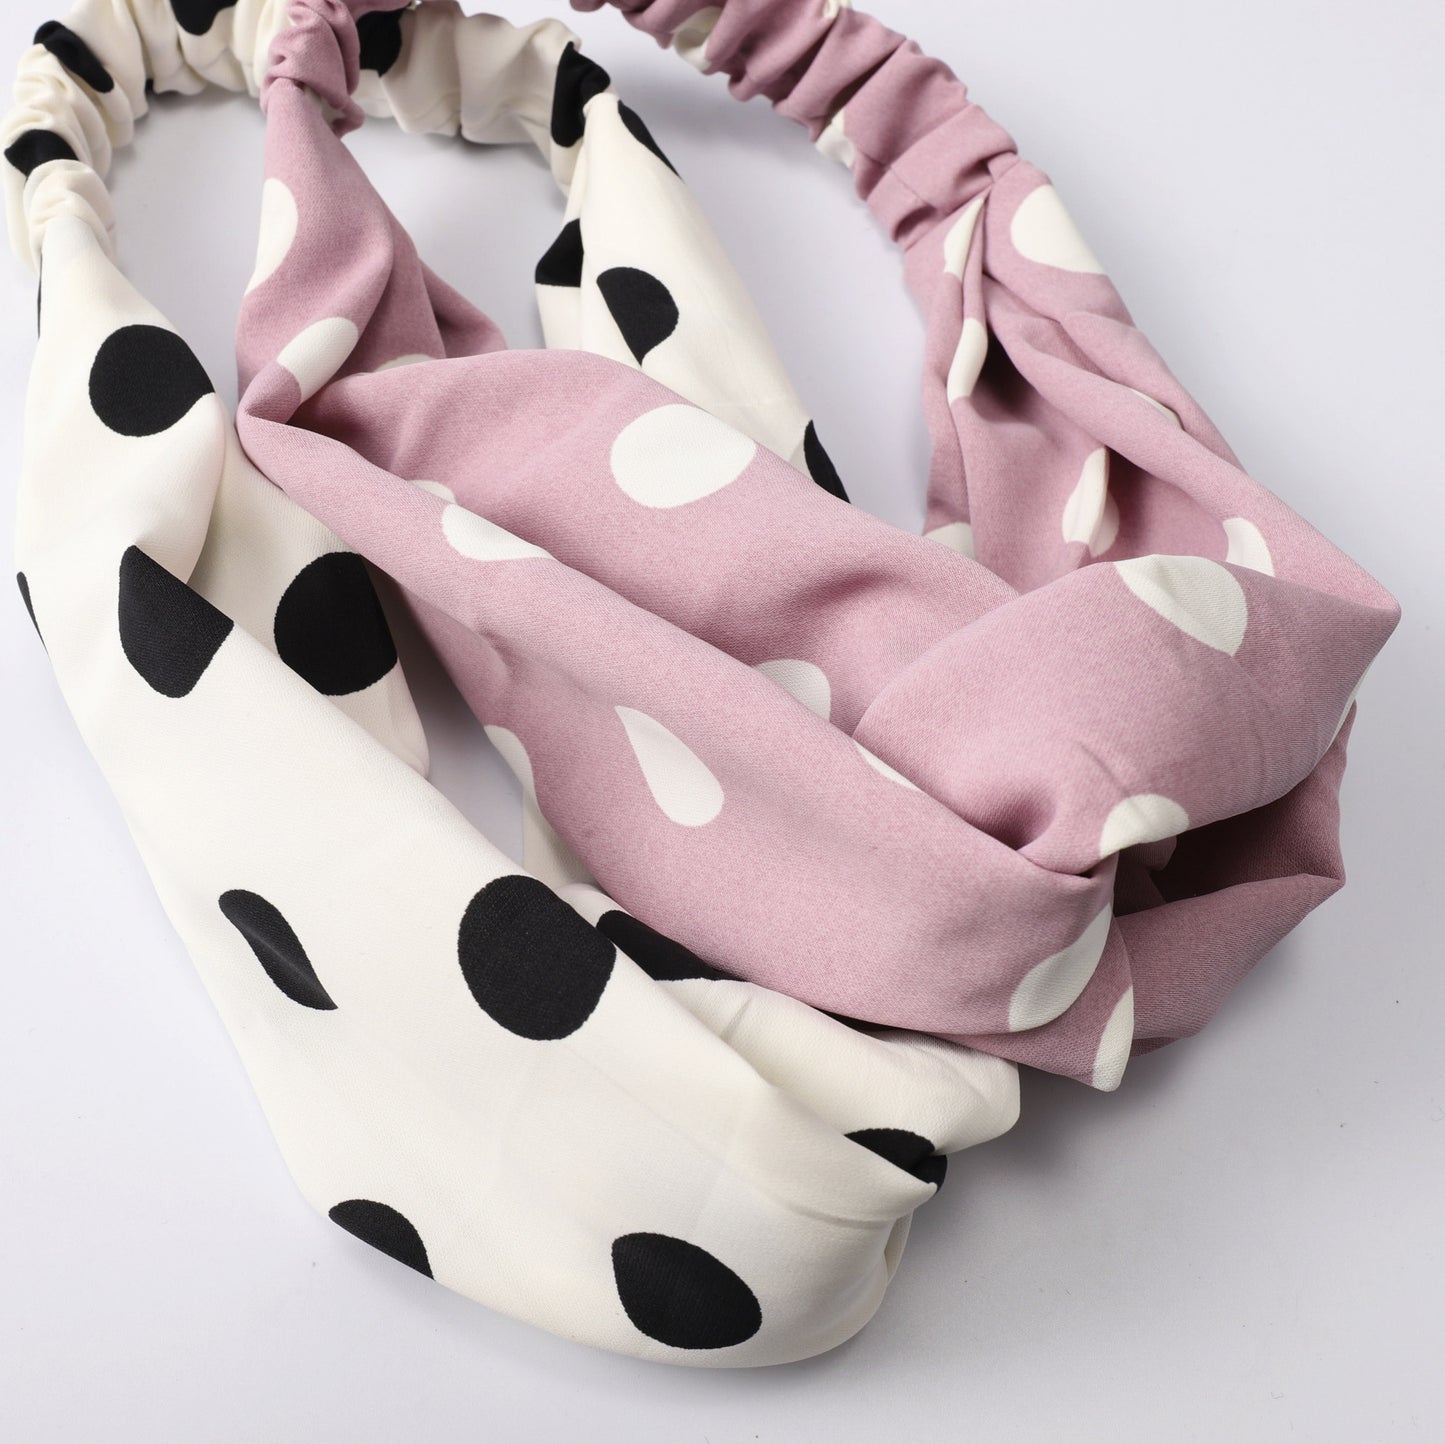 Polka dots soft chiffon twist front elastic headband